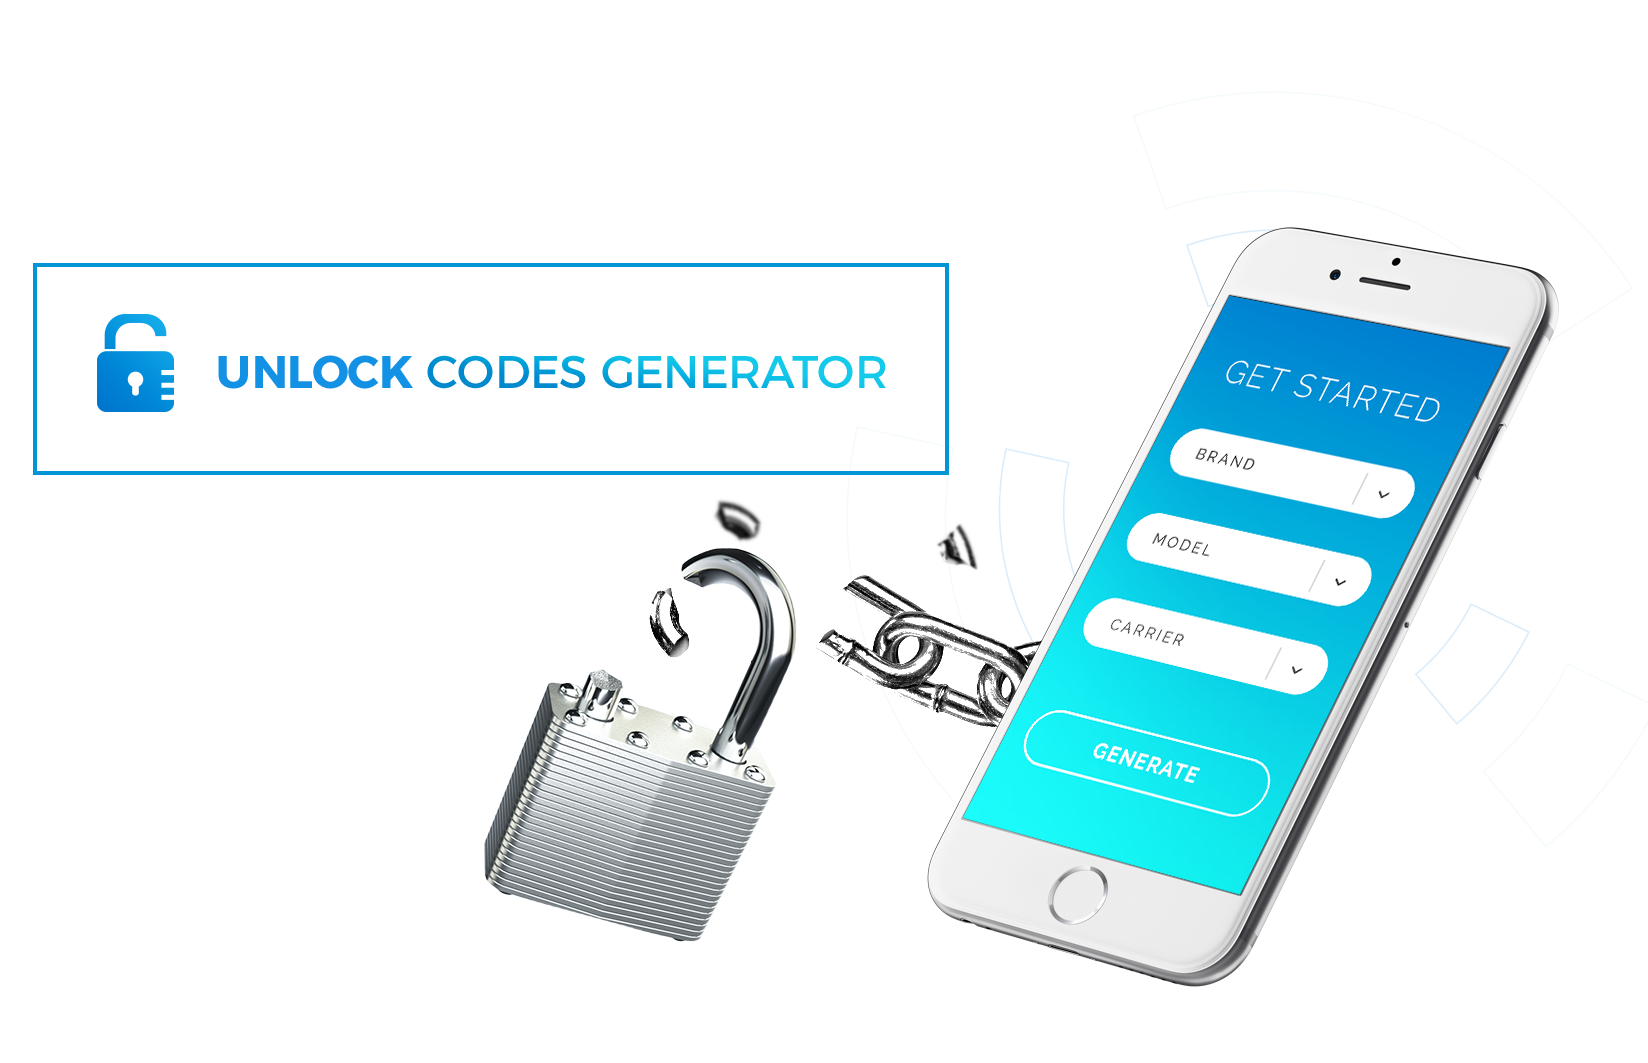 Free mobile unlock code website